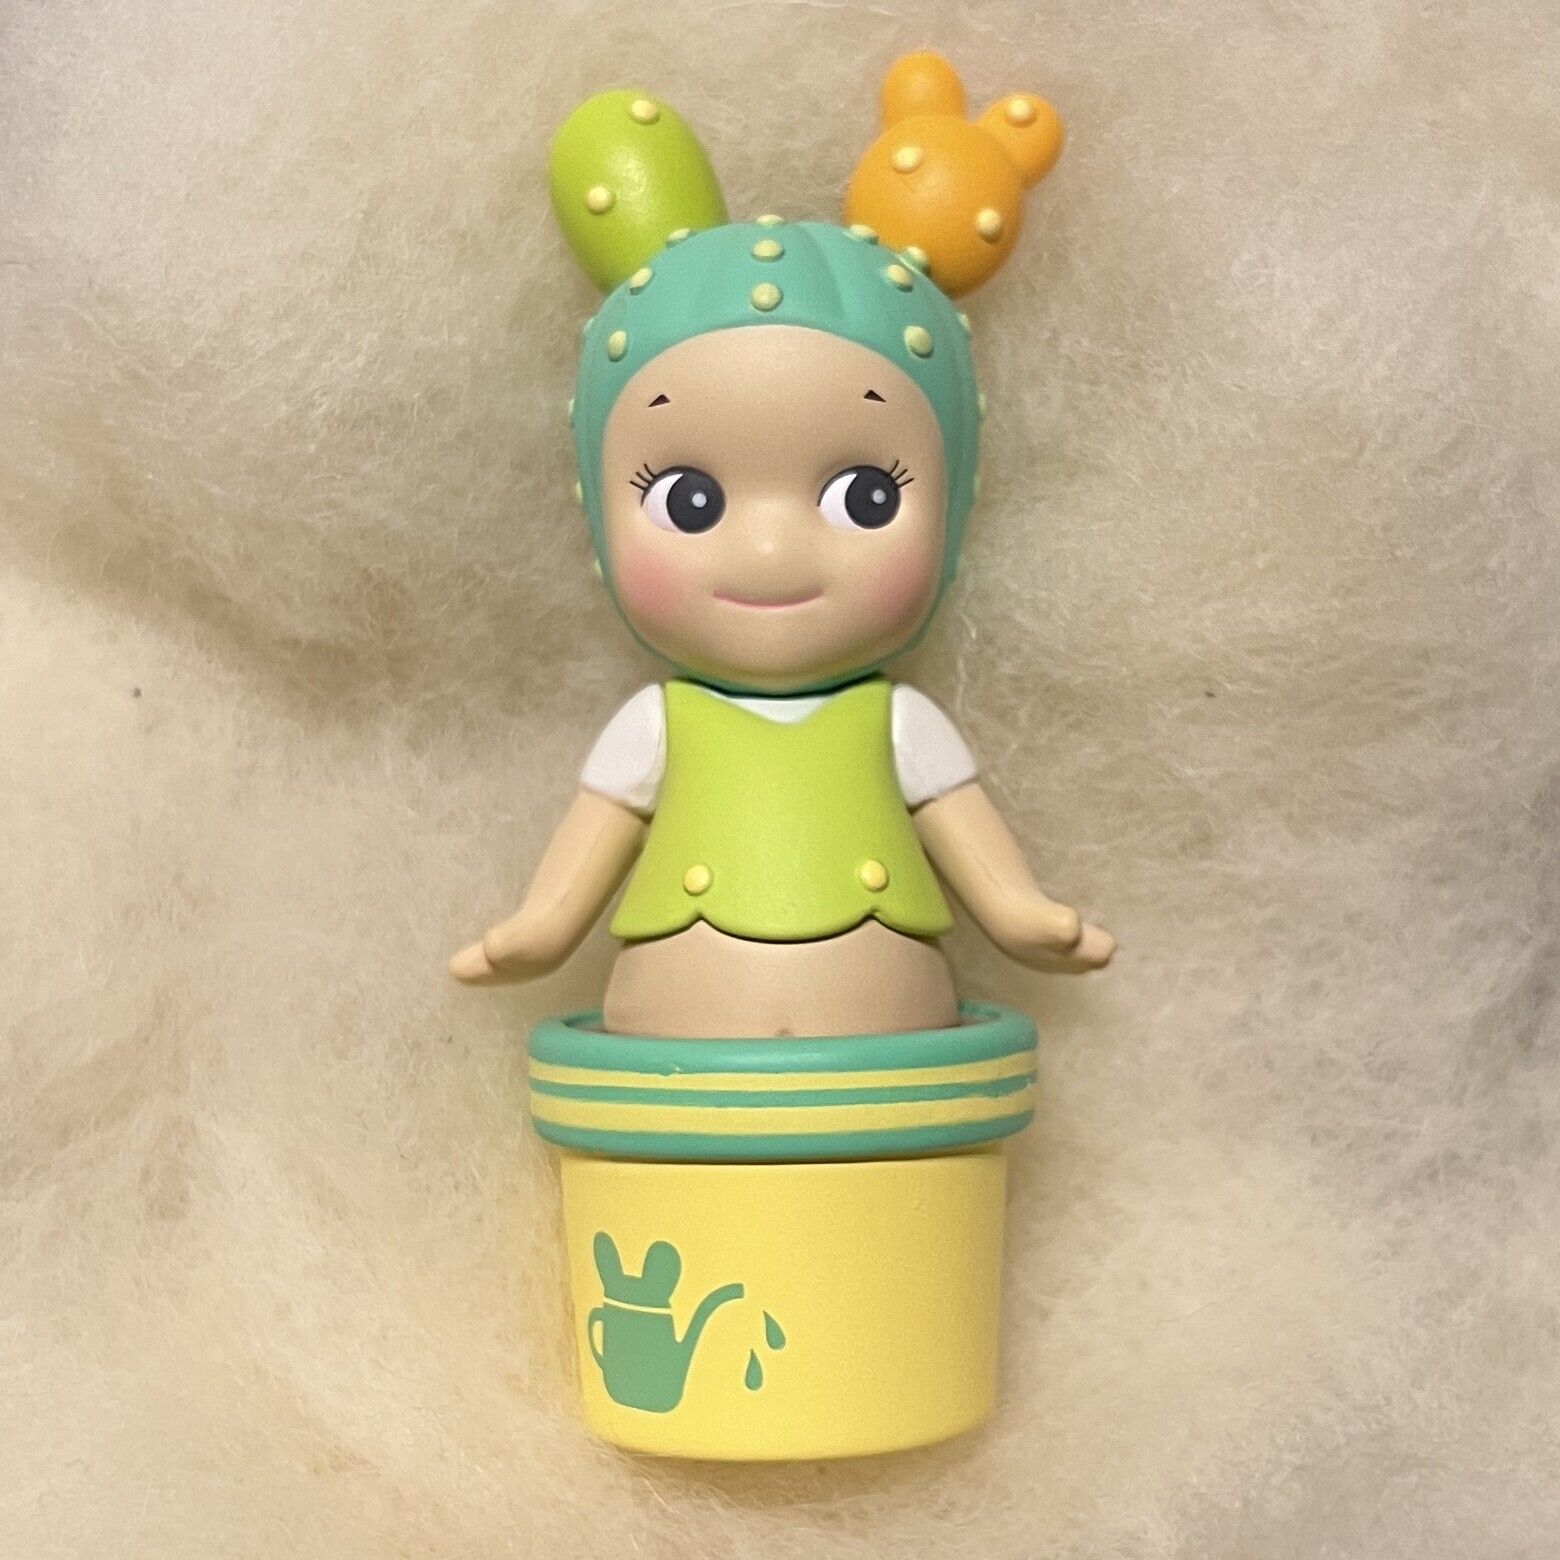 Sonny Angel Home Sweet Home Series - Gardening Cactus Pot Mini Figure